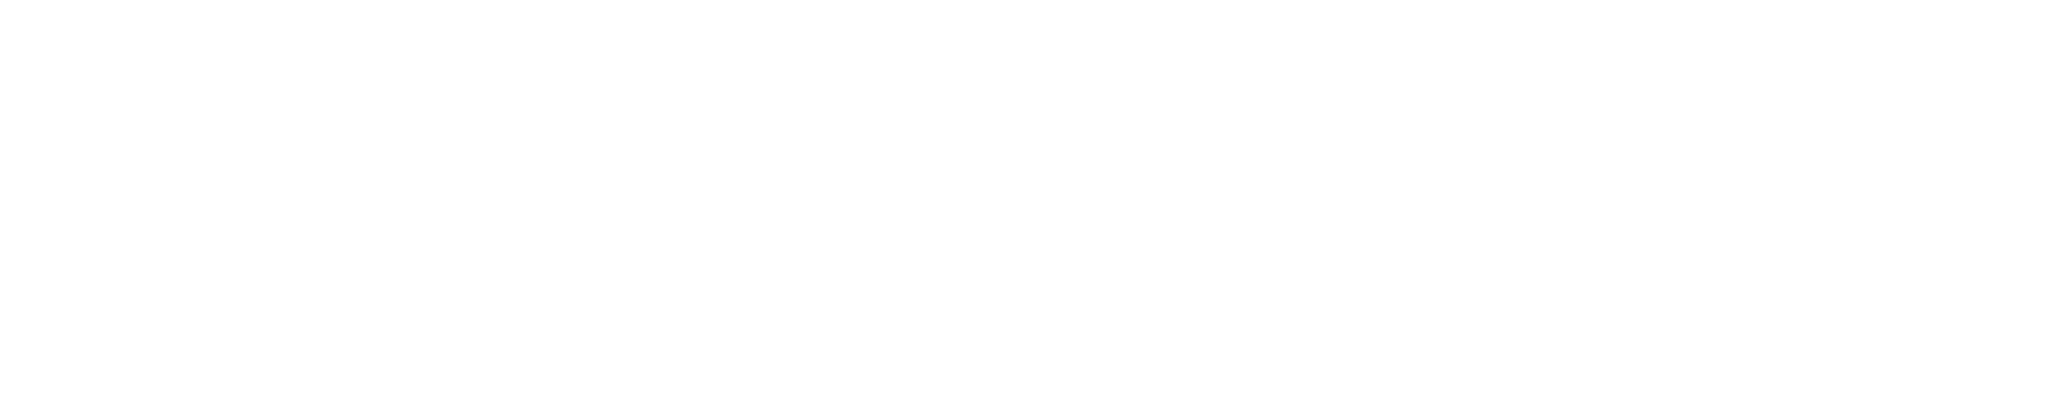 Somerset Investments Europe Ltd. Logo